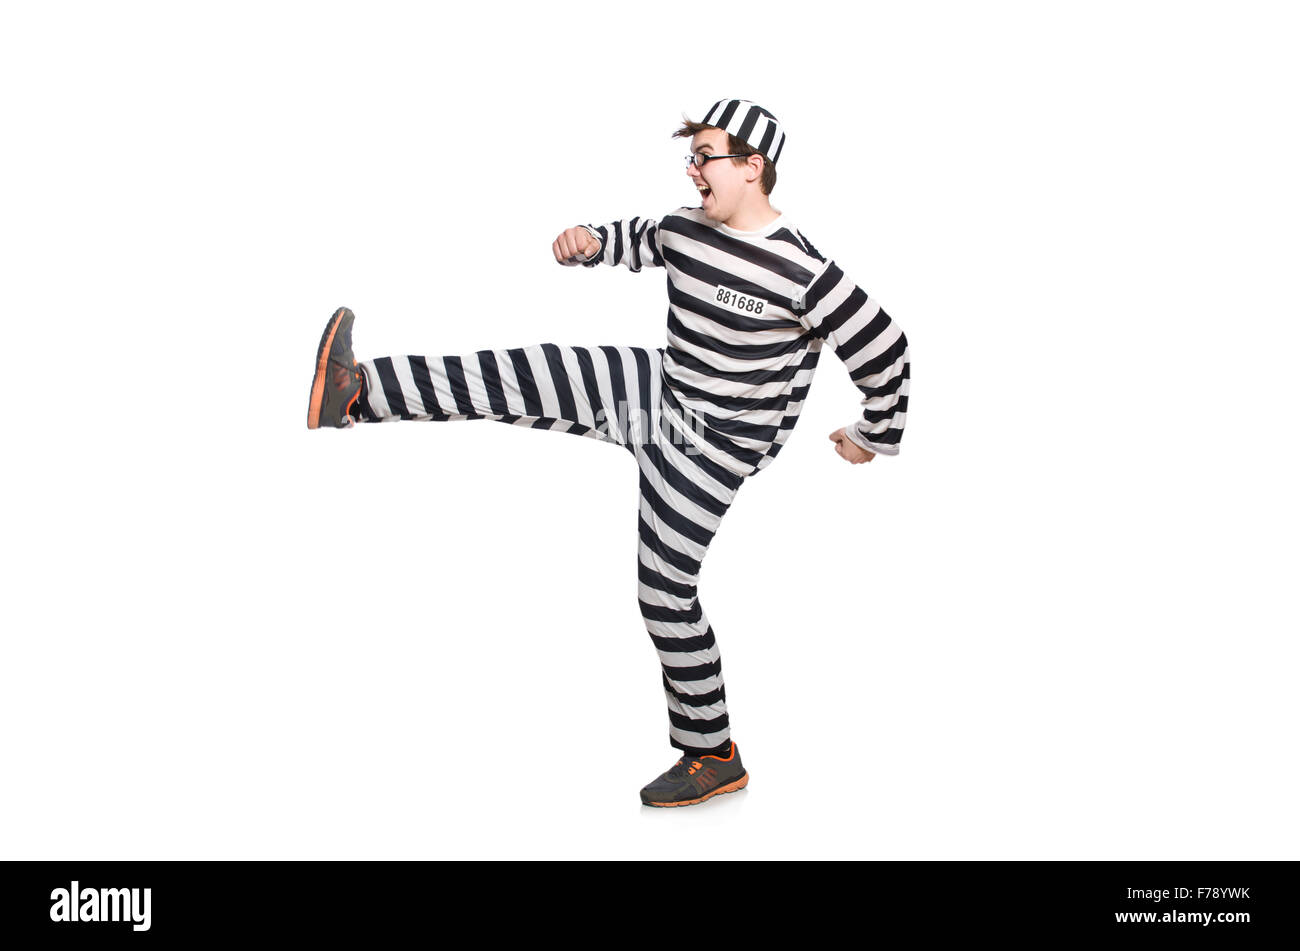 Funny prison inmate in concept Stock Photo